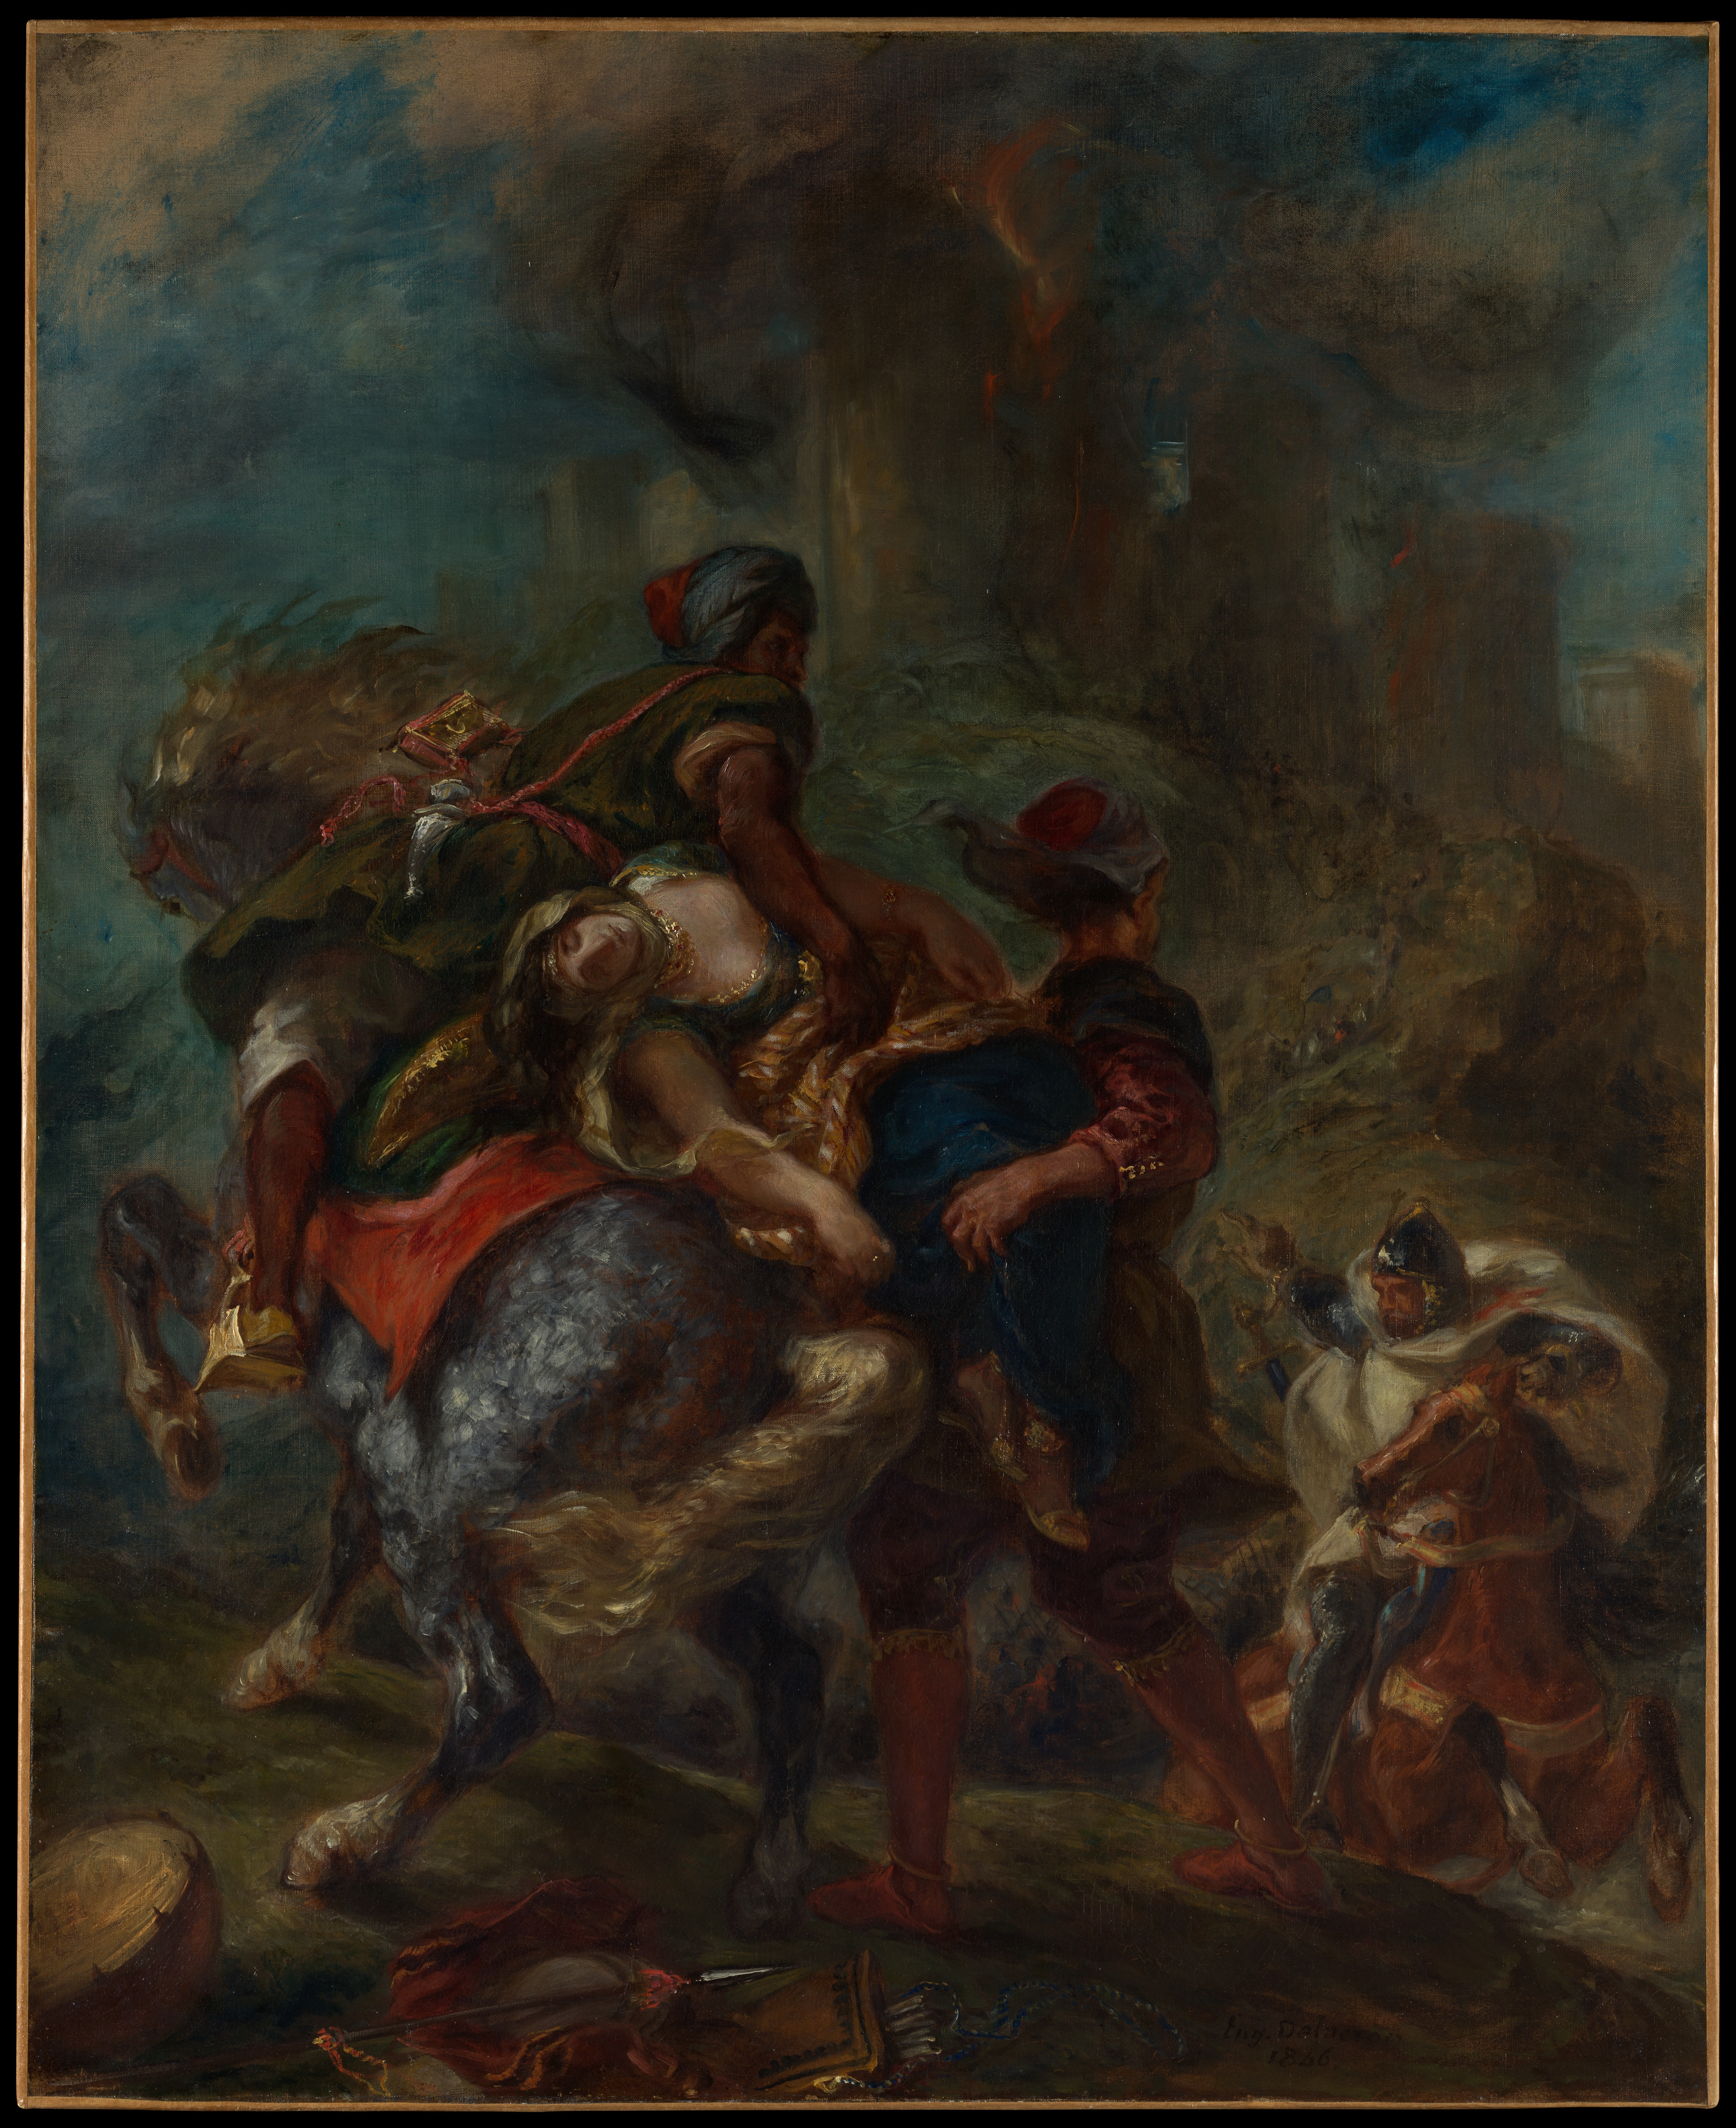 Rebecca'nın Kaçırılışı by Eugène Delacroix - 1846 - 100.3 x 81.9 cm 